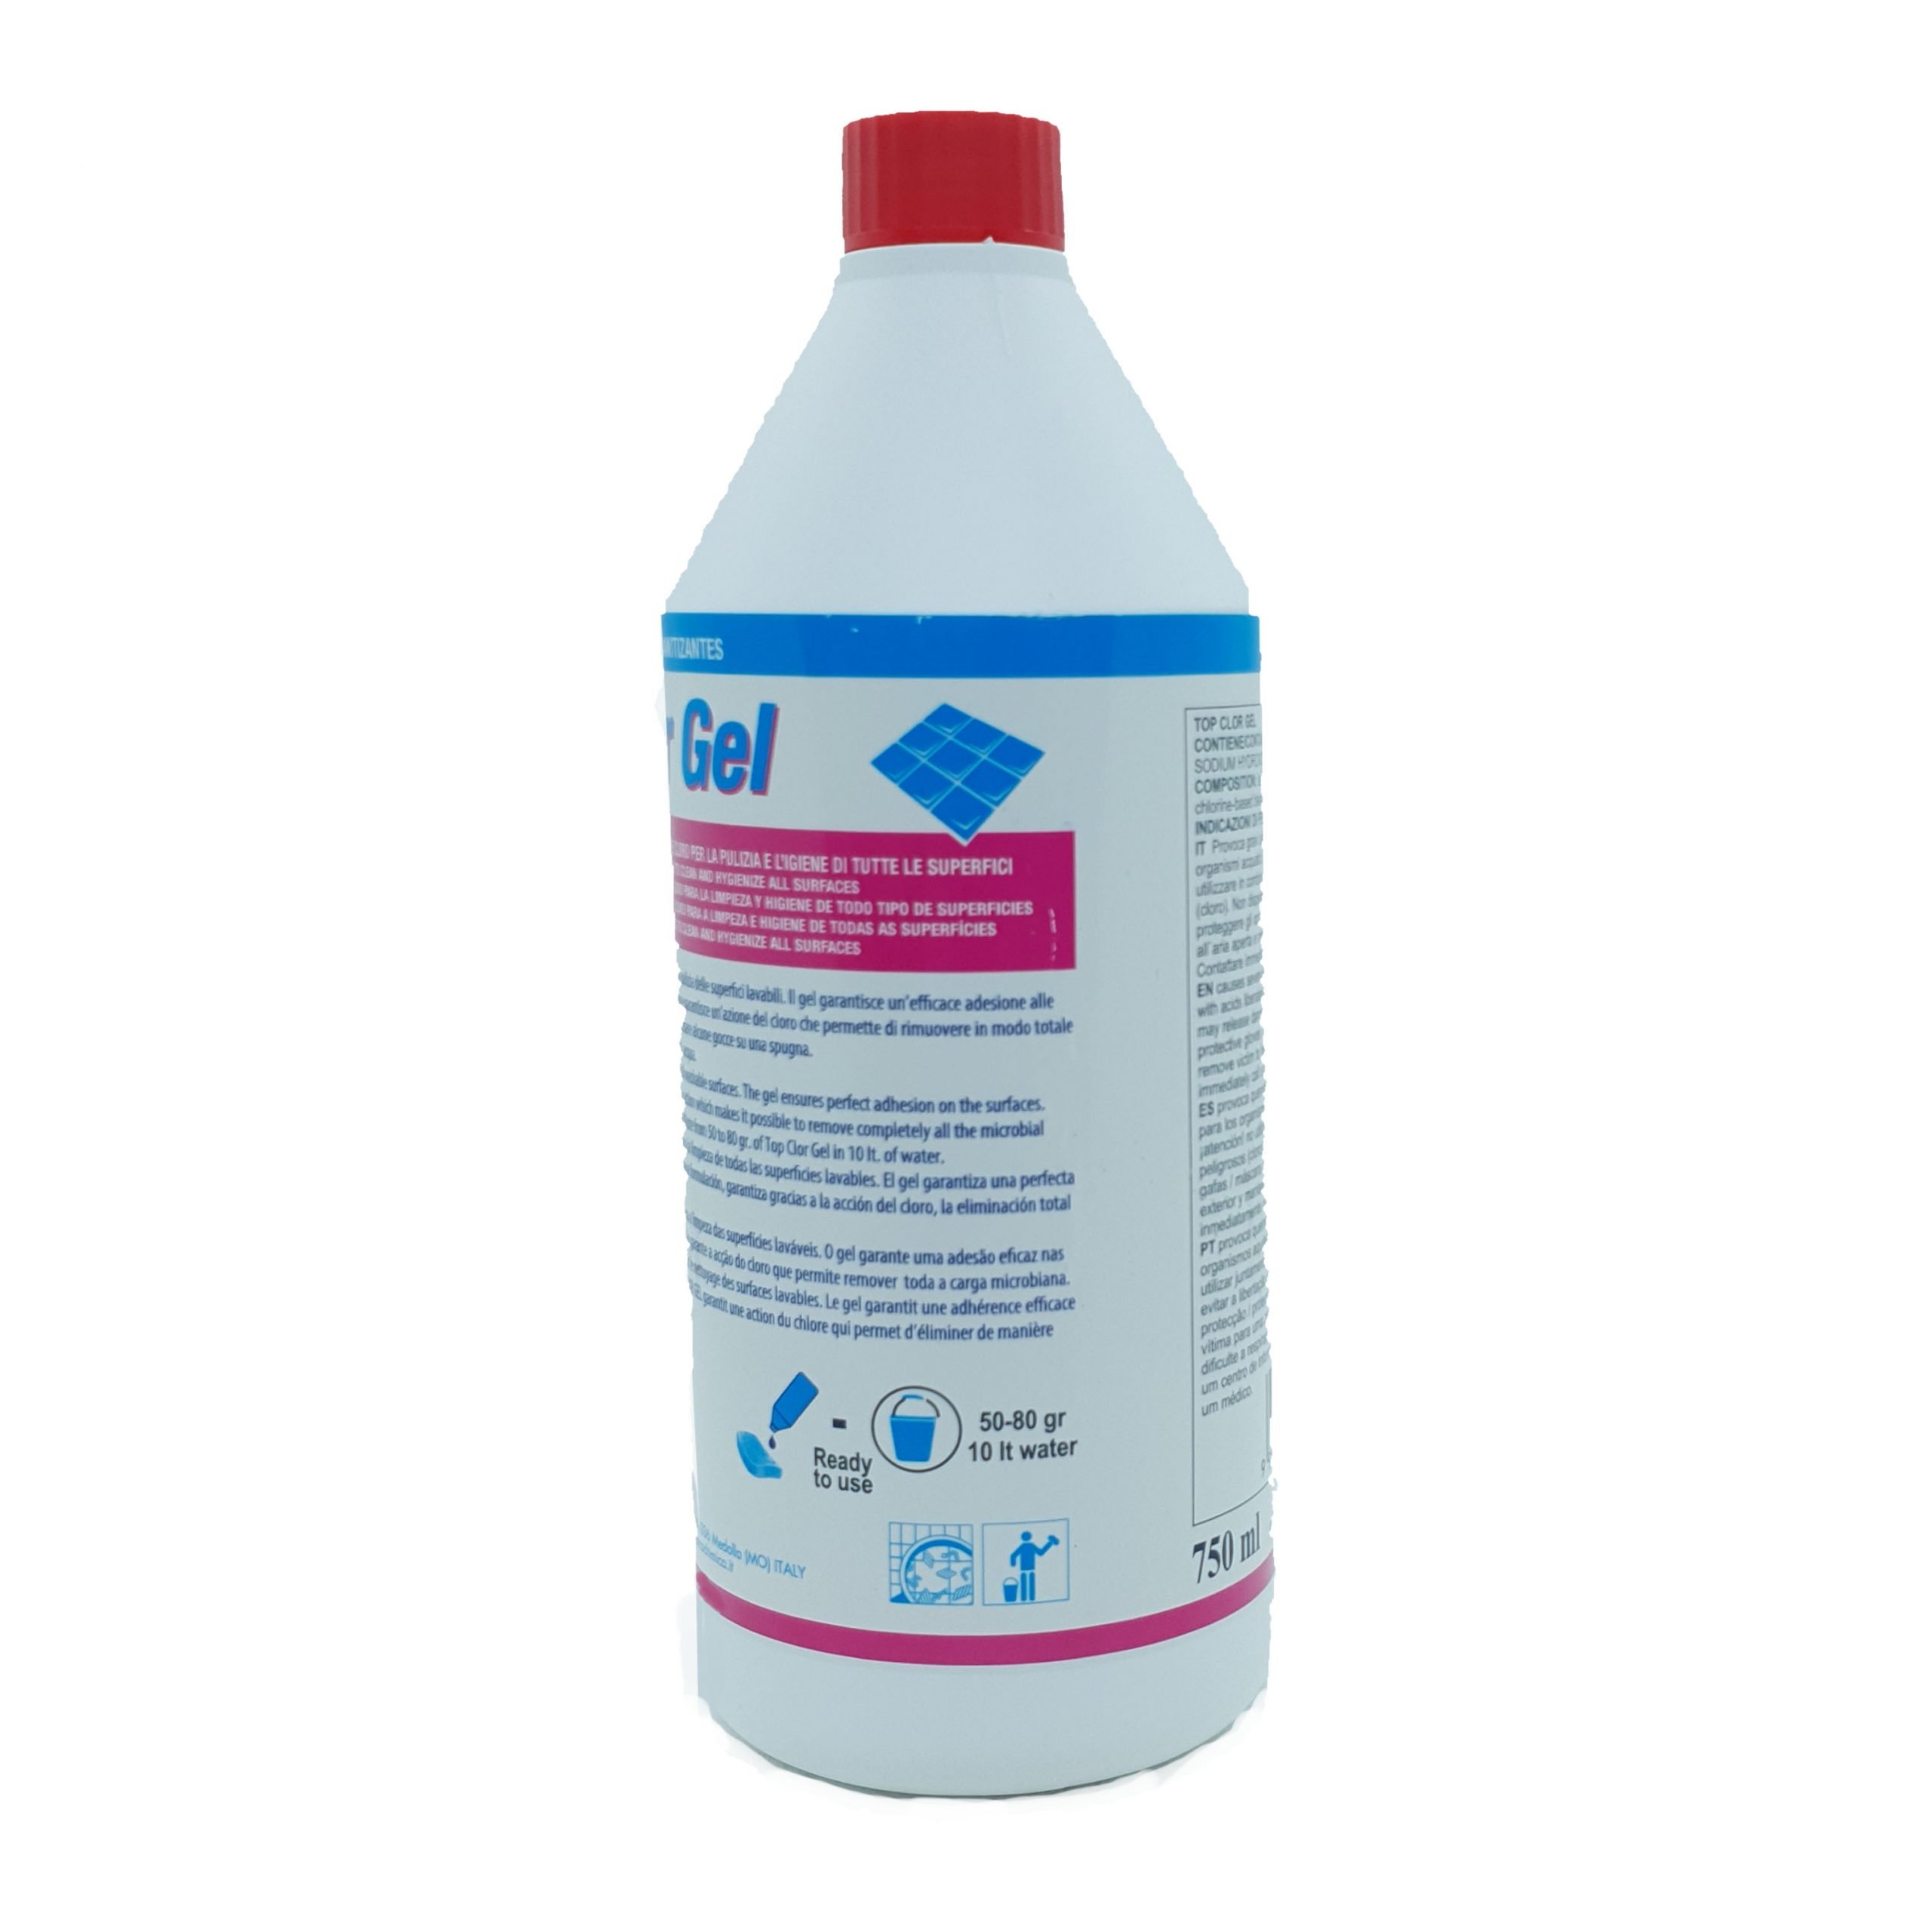 Detergentea base di cloro, TOP CLOR GEL, ARCO, 750 ml - FeF Solution